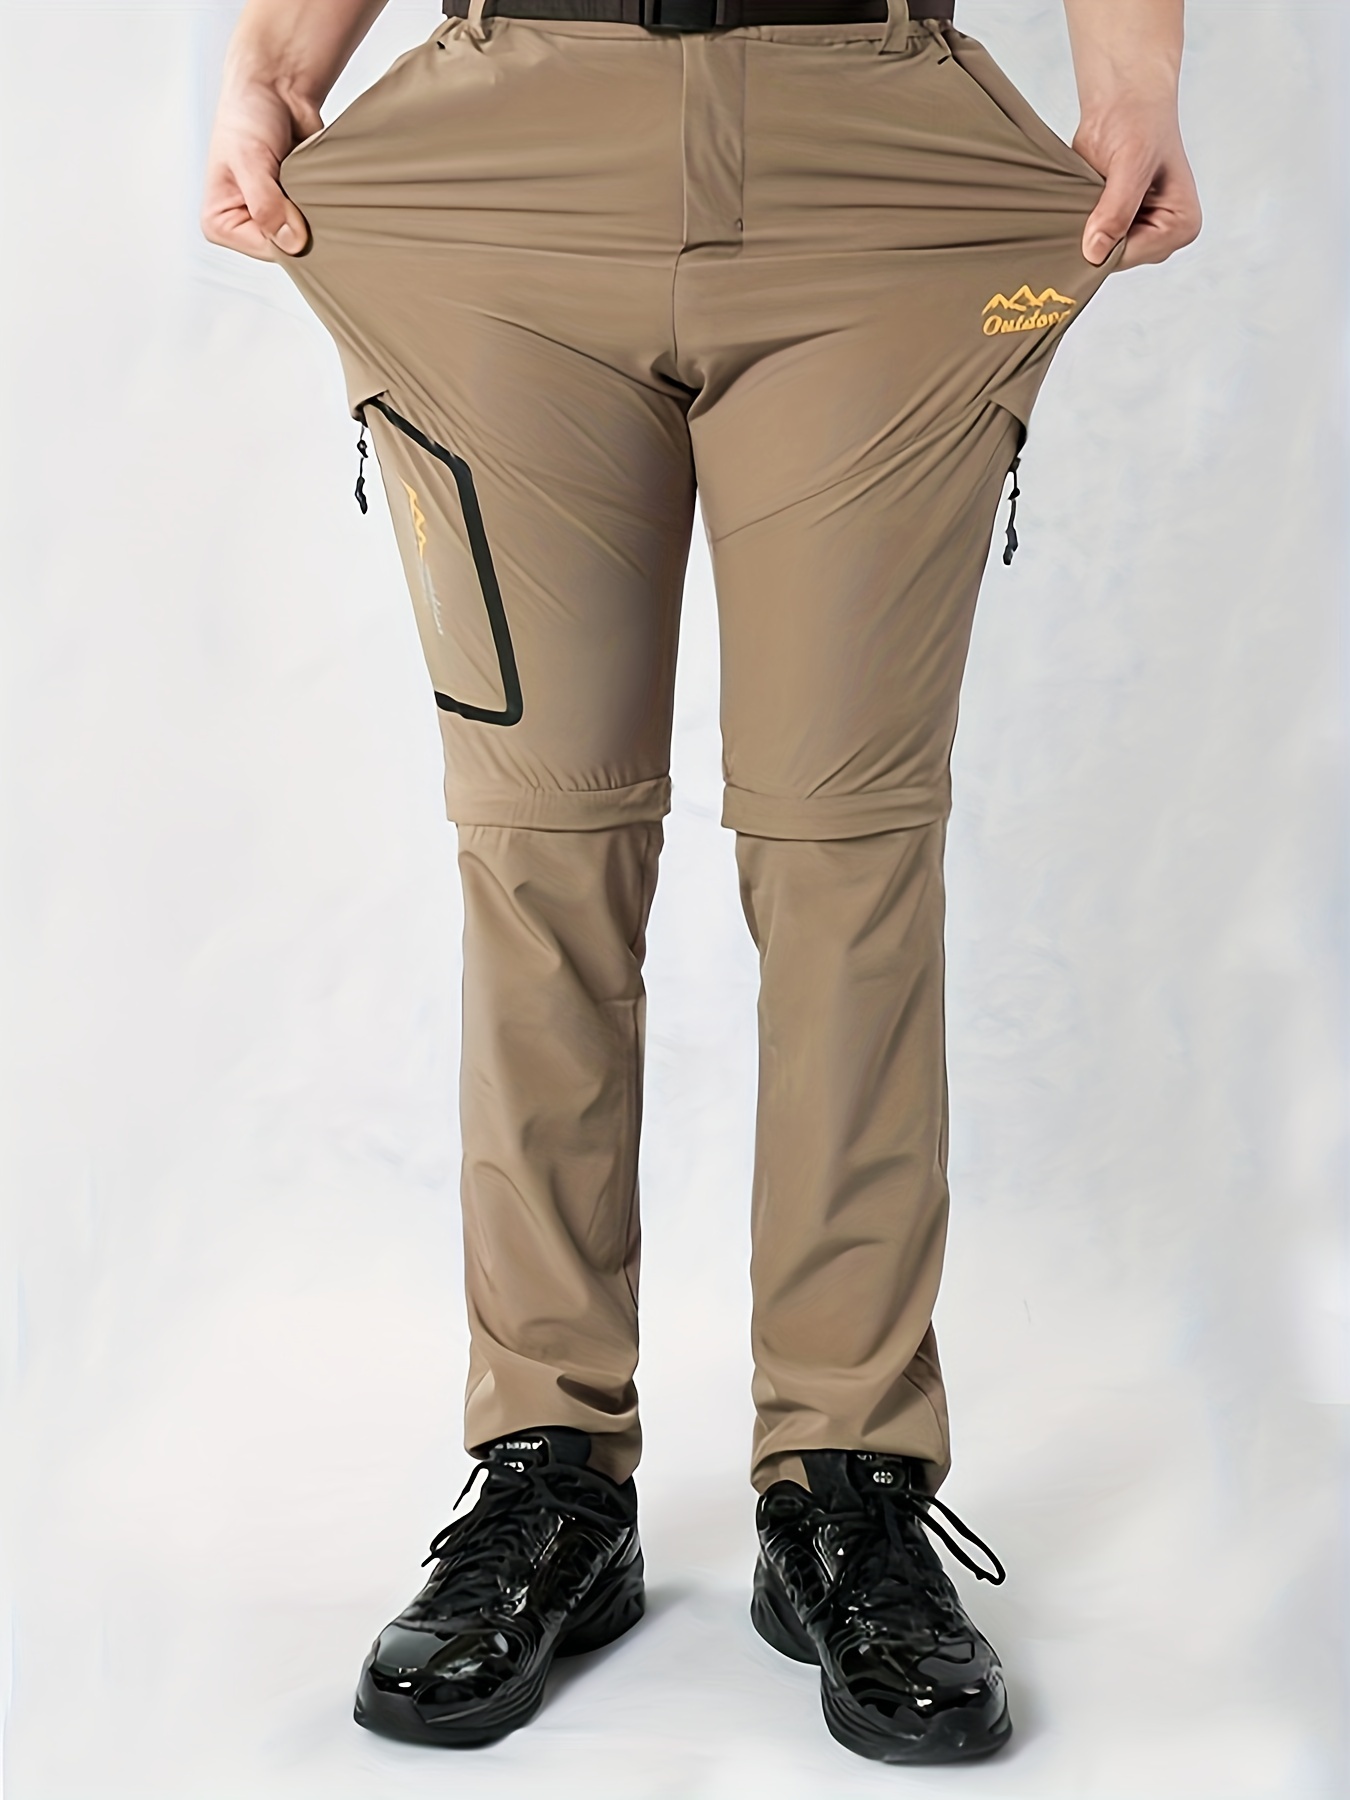 MANSDOUR Men's Hiking Pants Convertible Quick Dry Lightweight Zip